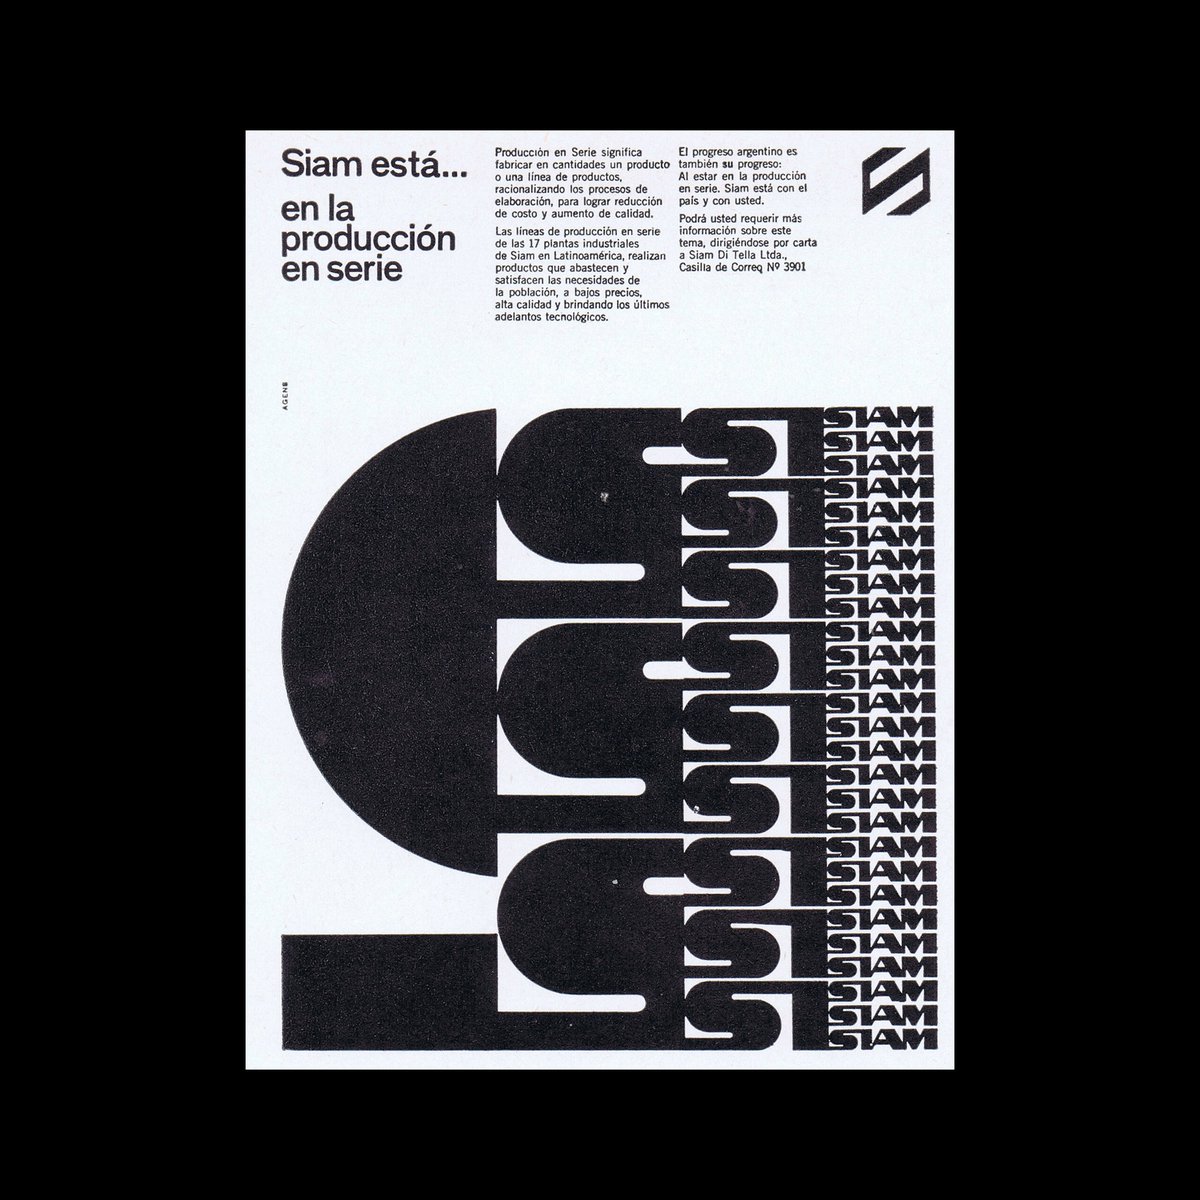 The design work of Gonzalez Ruiz, from Gebrauchsgraphik, 4, 1964 designreviewed.com/guillermo-gonz… #graphicdesign #argentina #vintagegraphics #typography